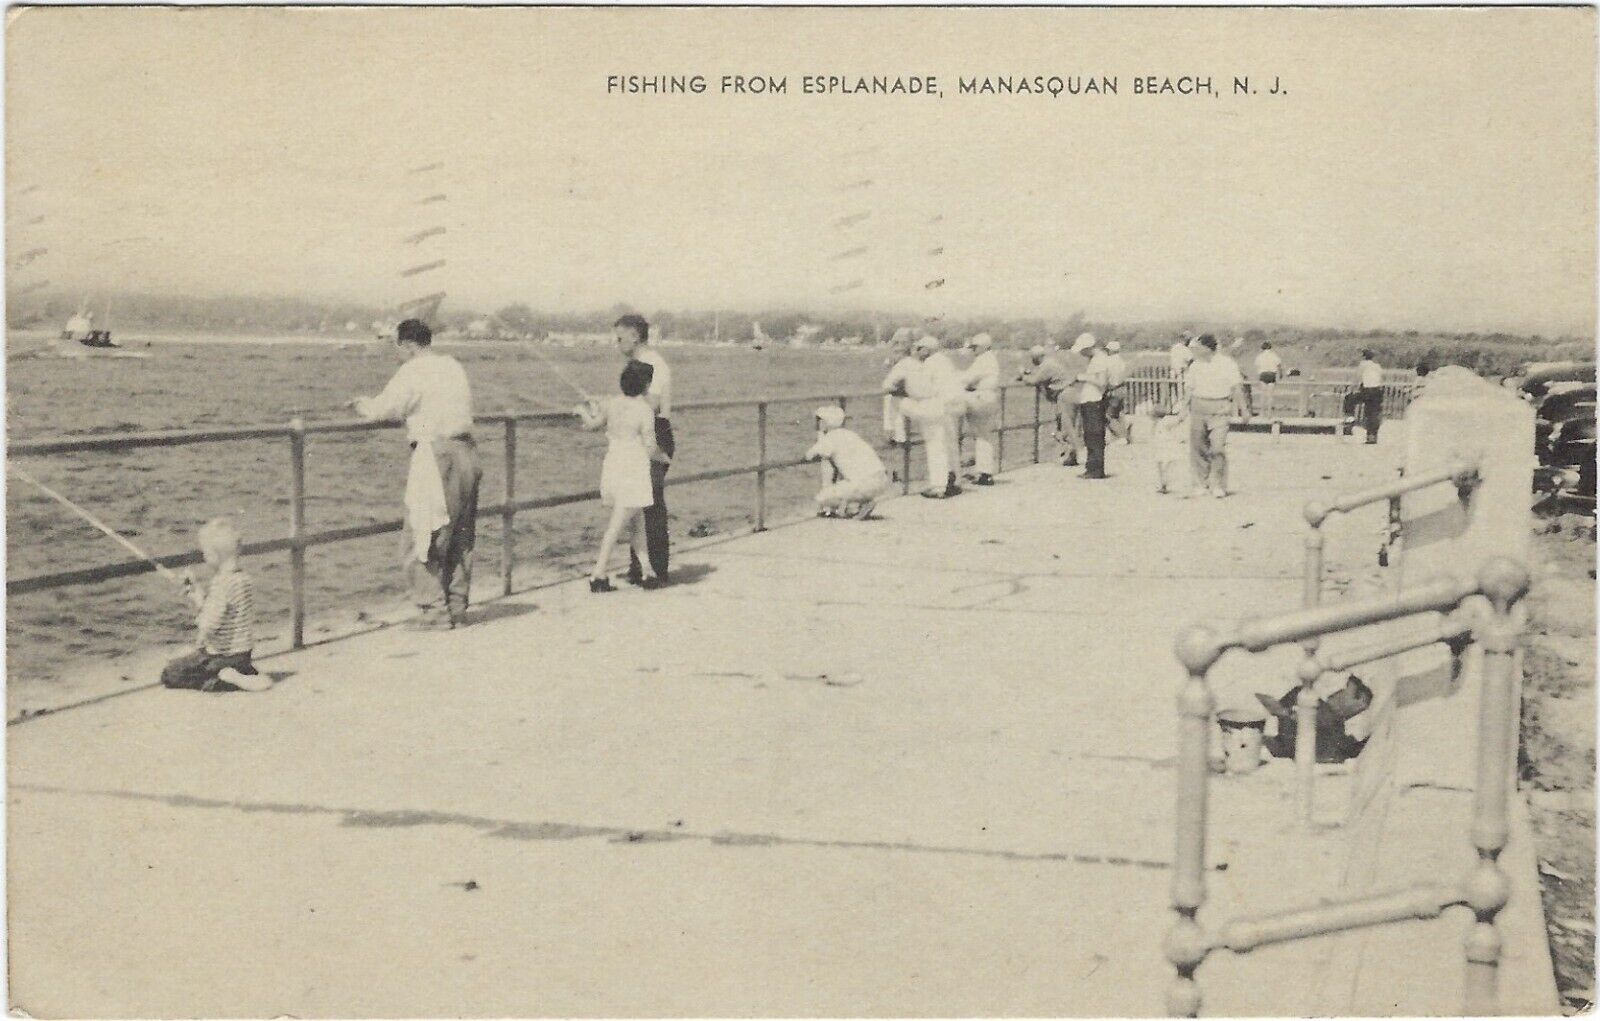 Manasquan Beach NJ Fishing from the Esplanade 1949